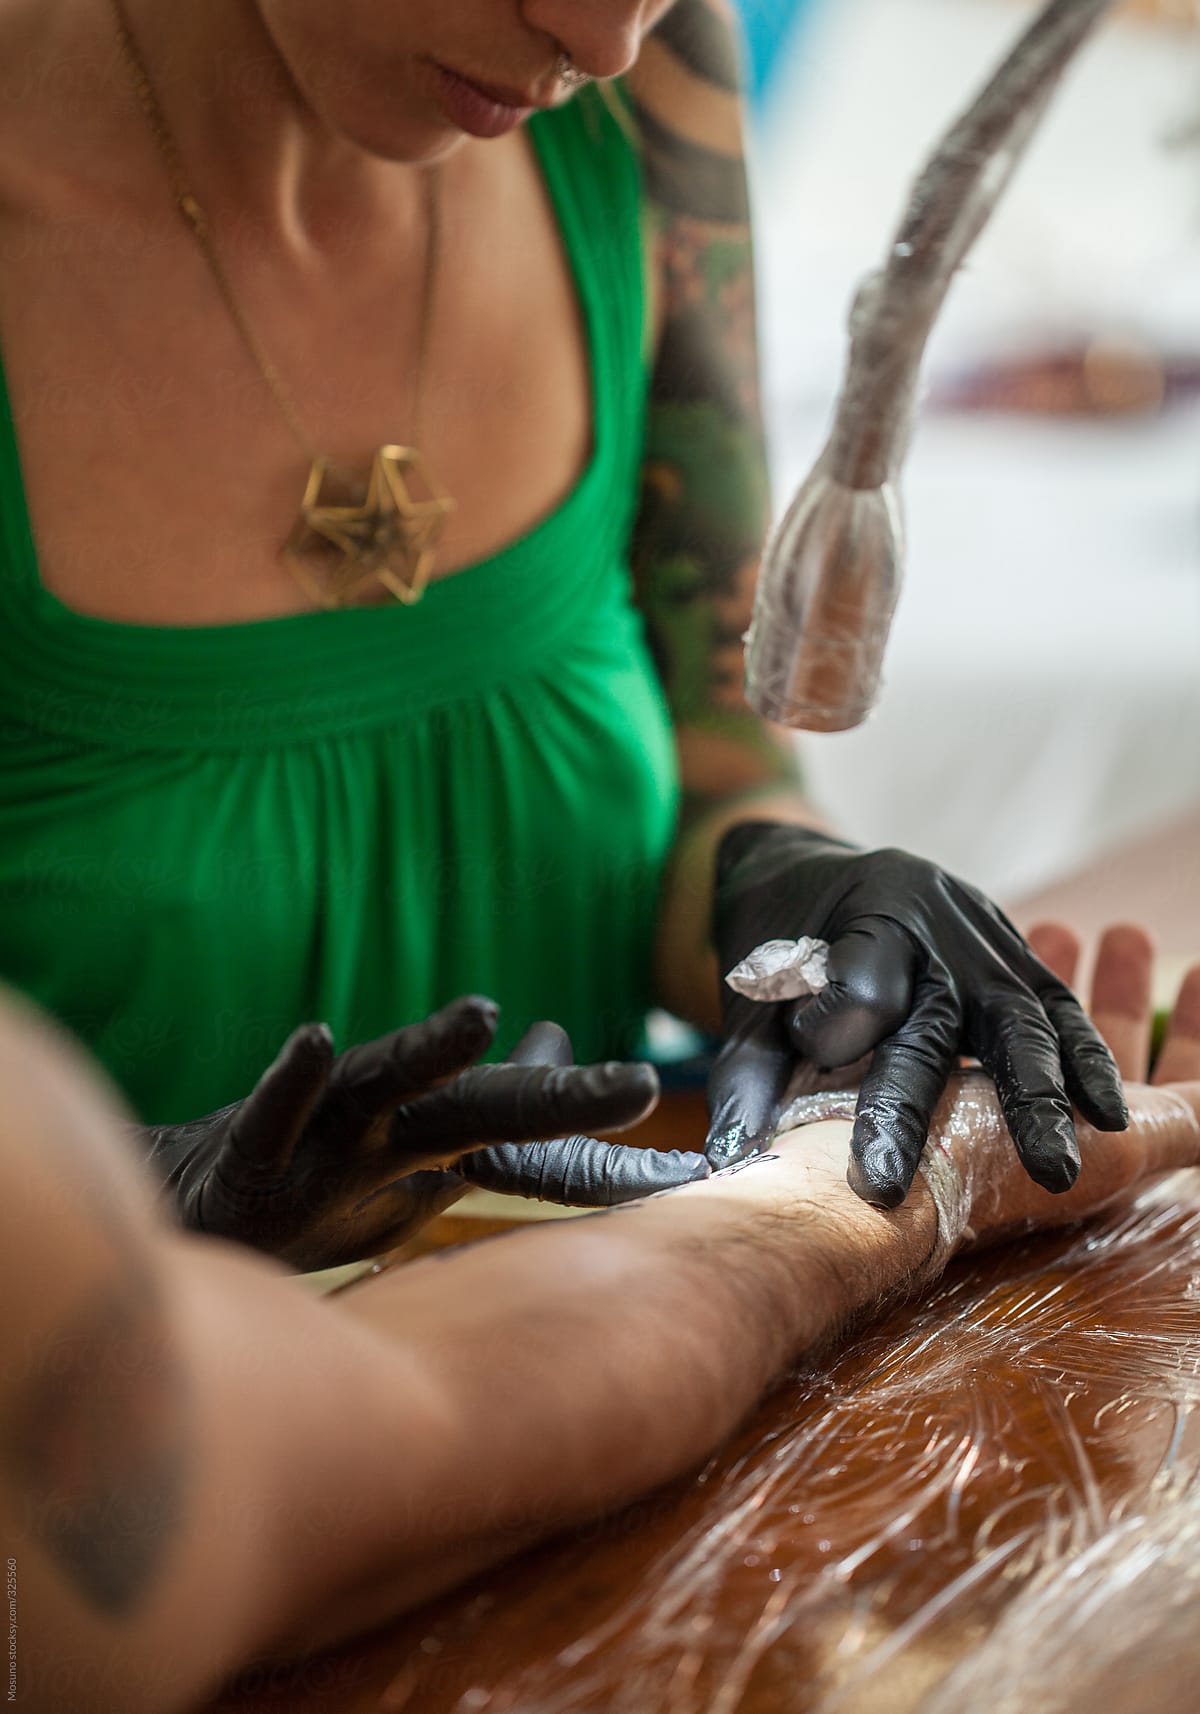 Tattoo Artist Applying Cream on Man's Arm